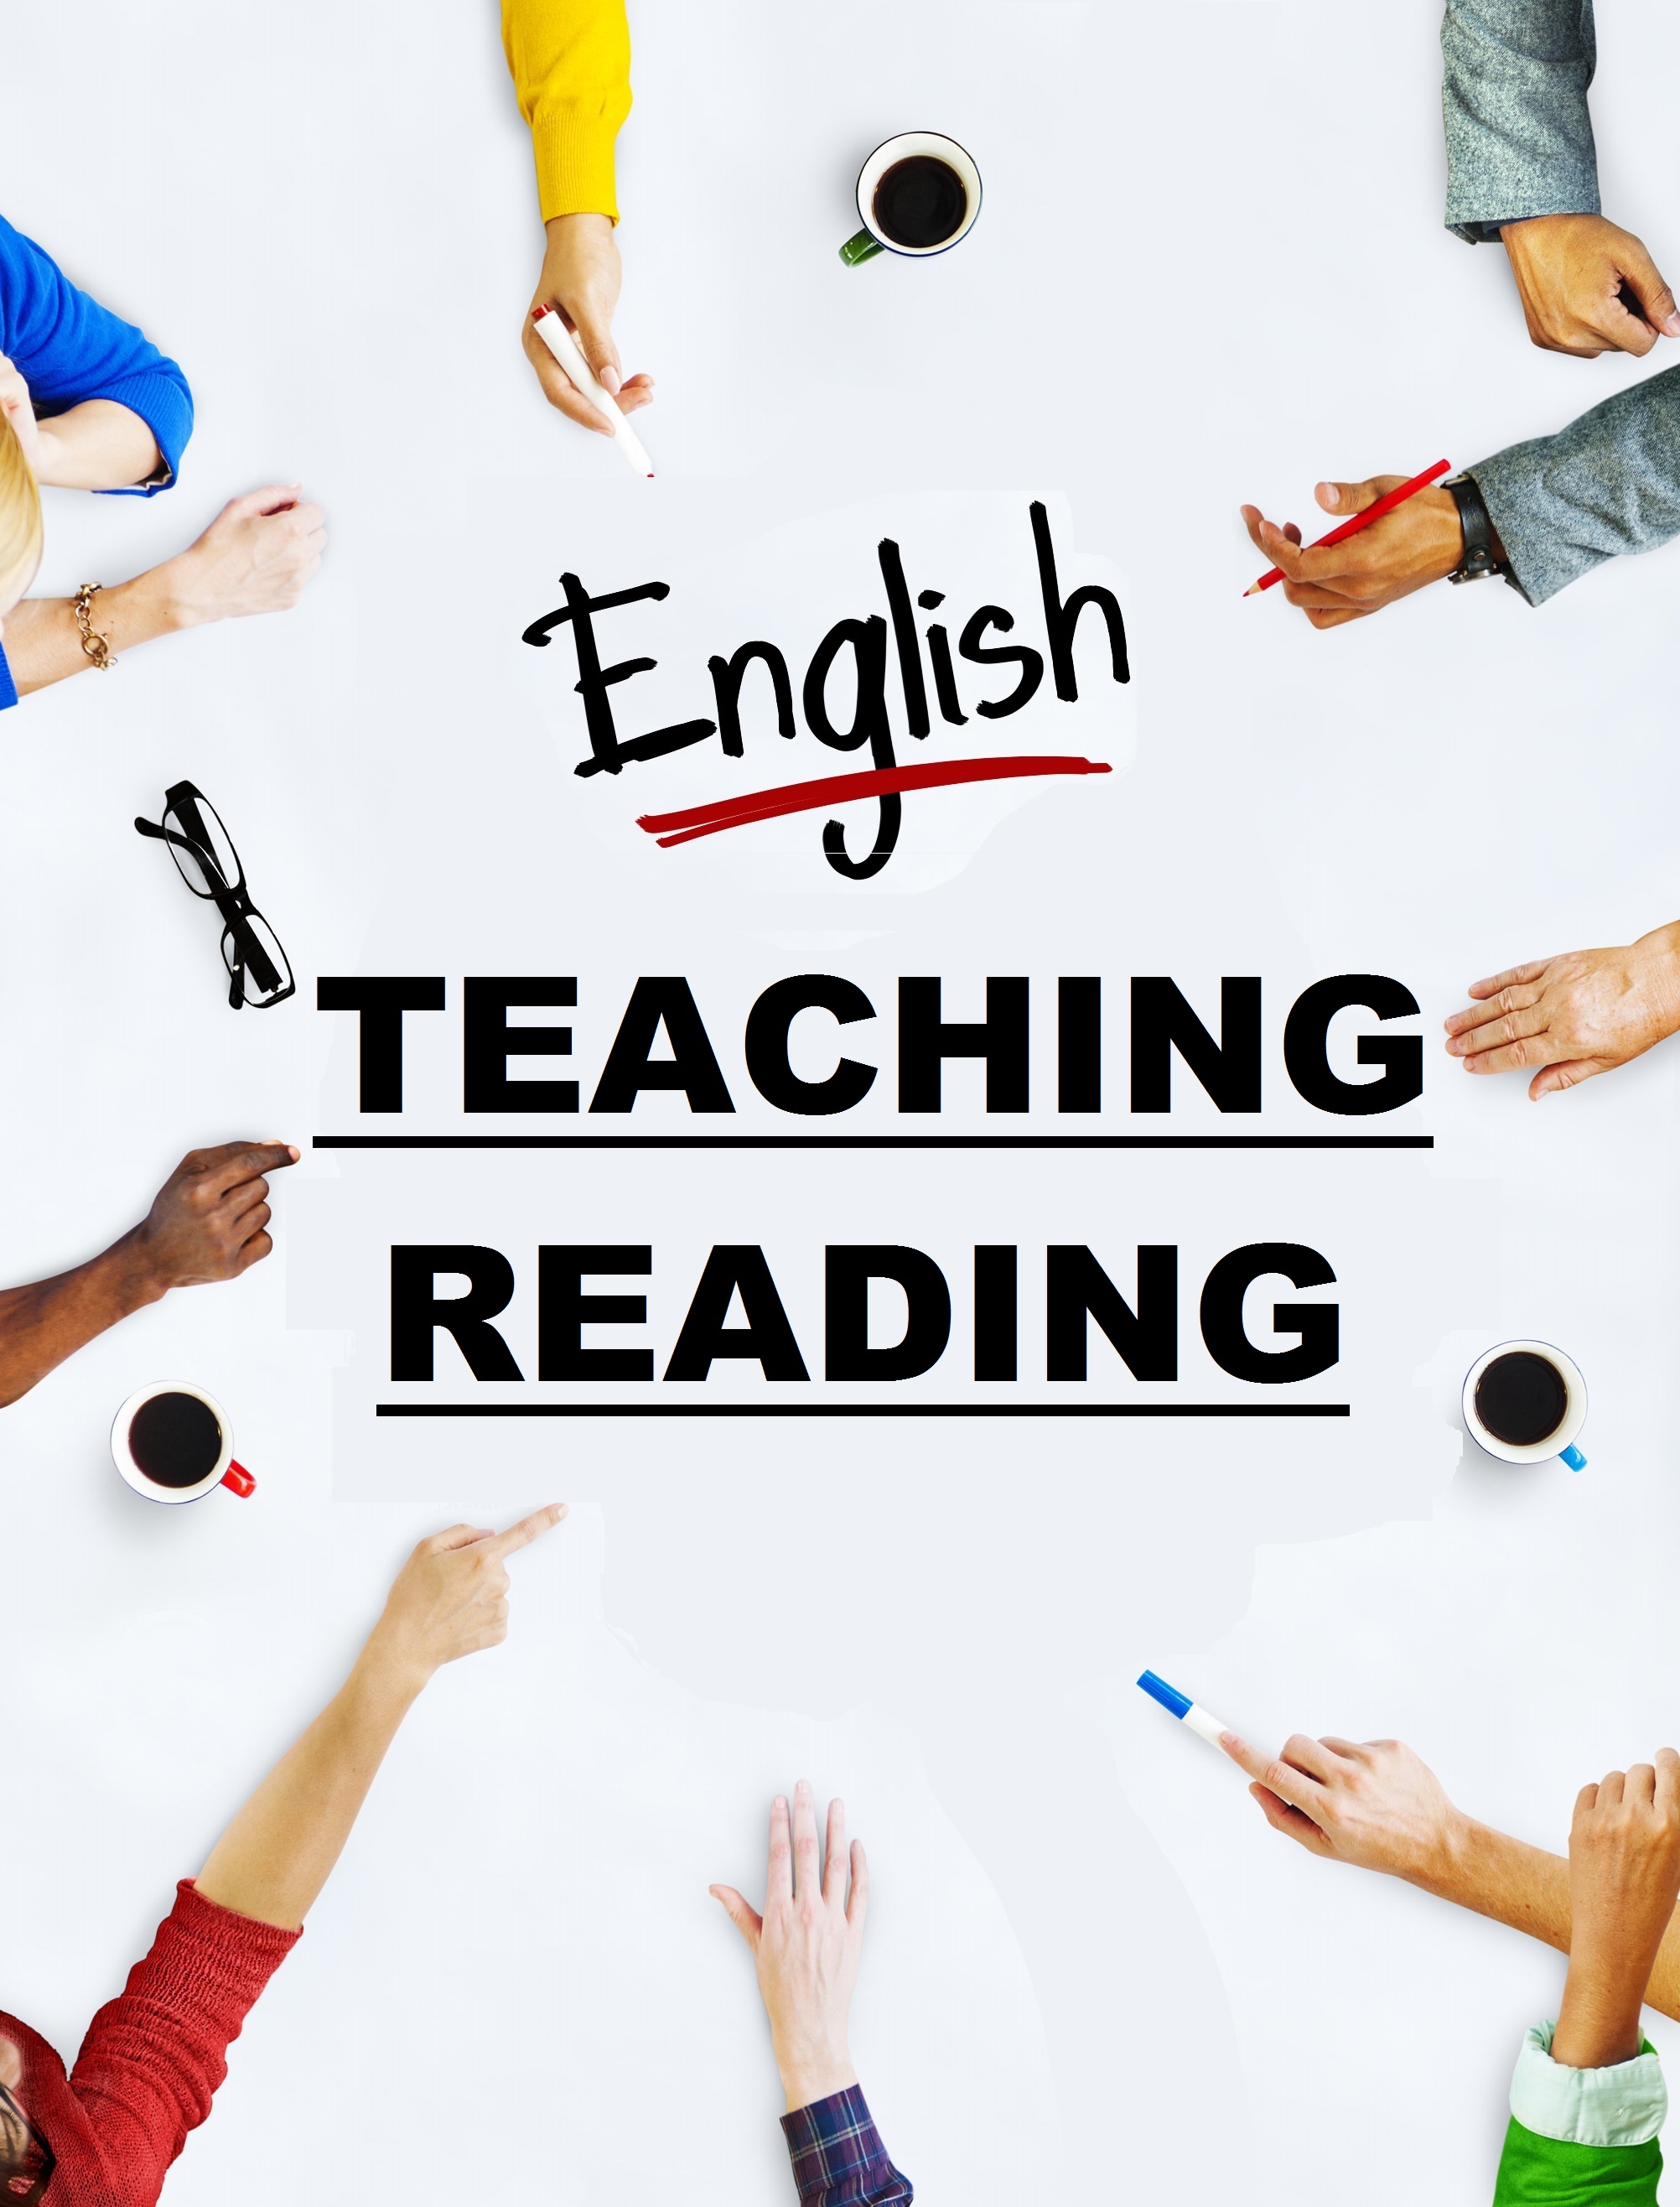 Запись вебинара "Teaching reading: How to make full use of graded readers"